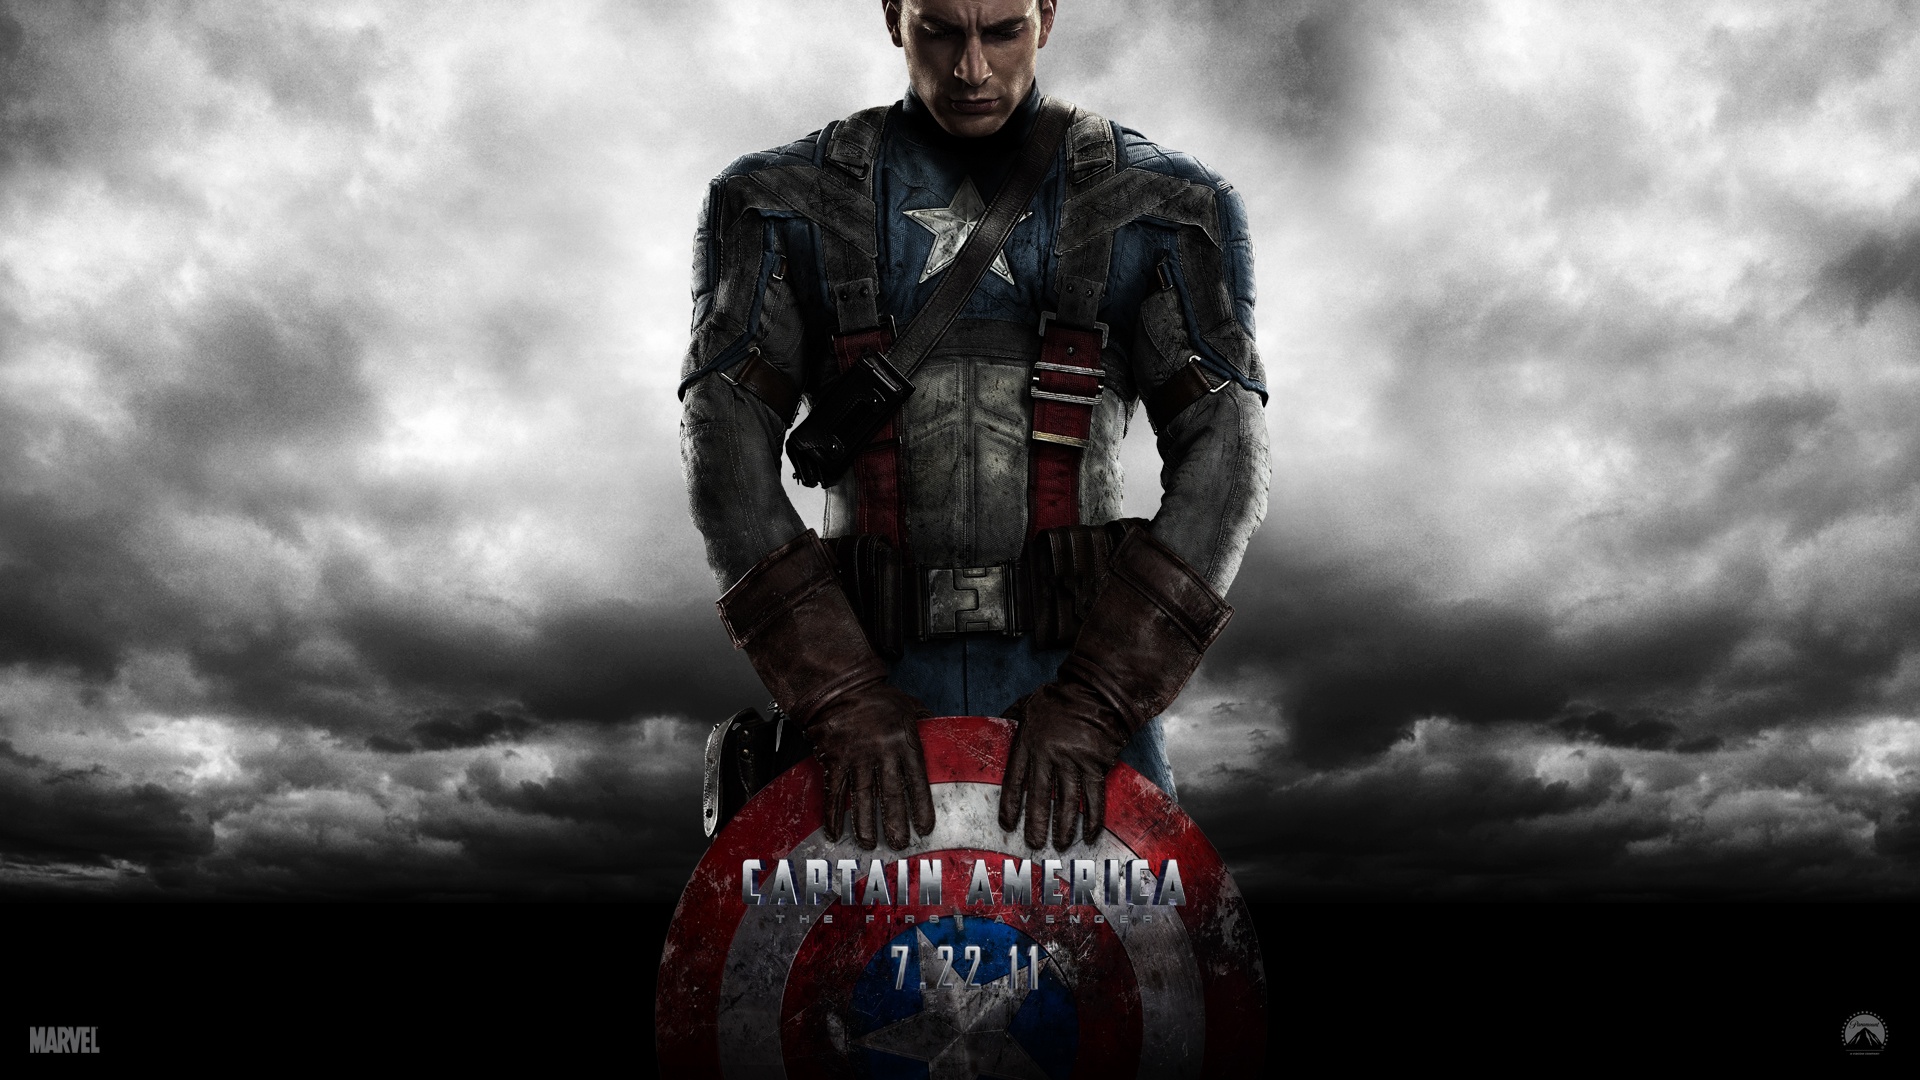 Captain America First Avenger Wallpapers in jpg format for free